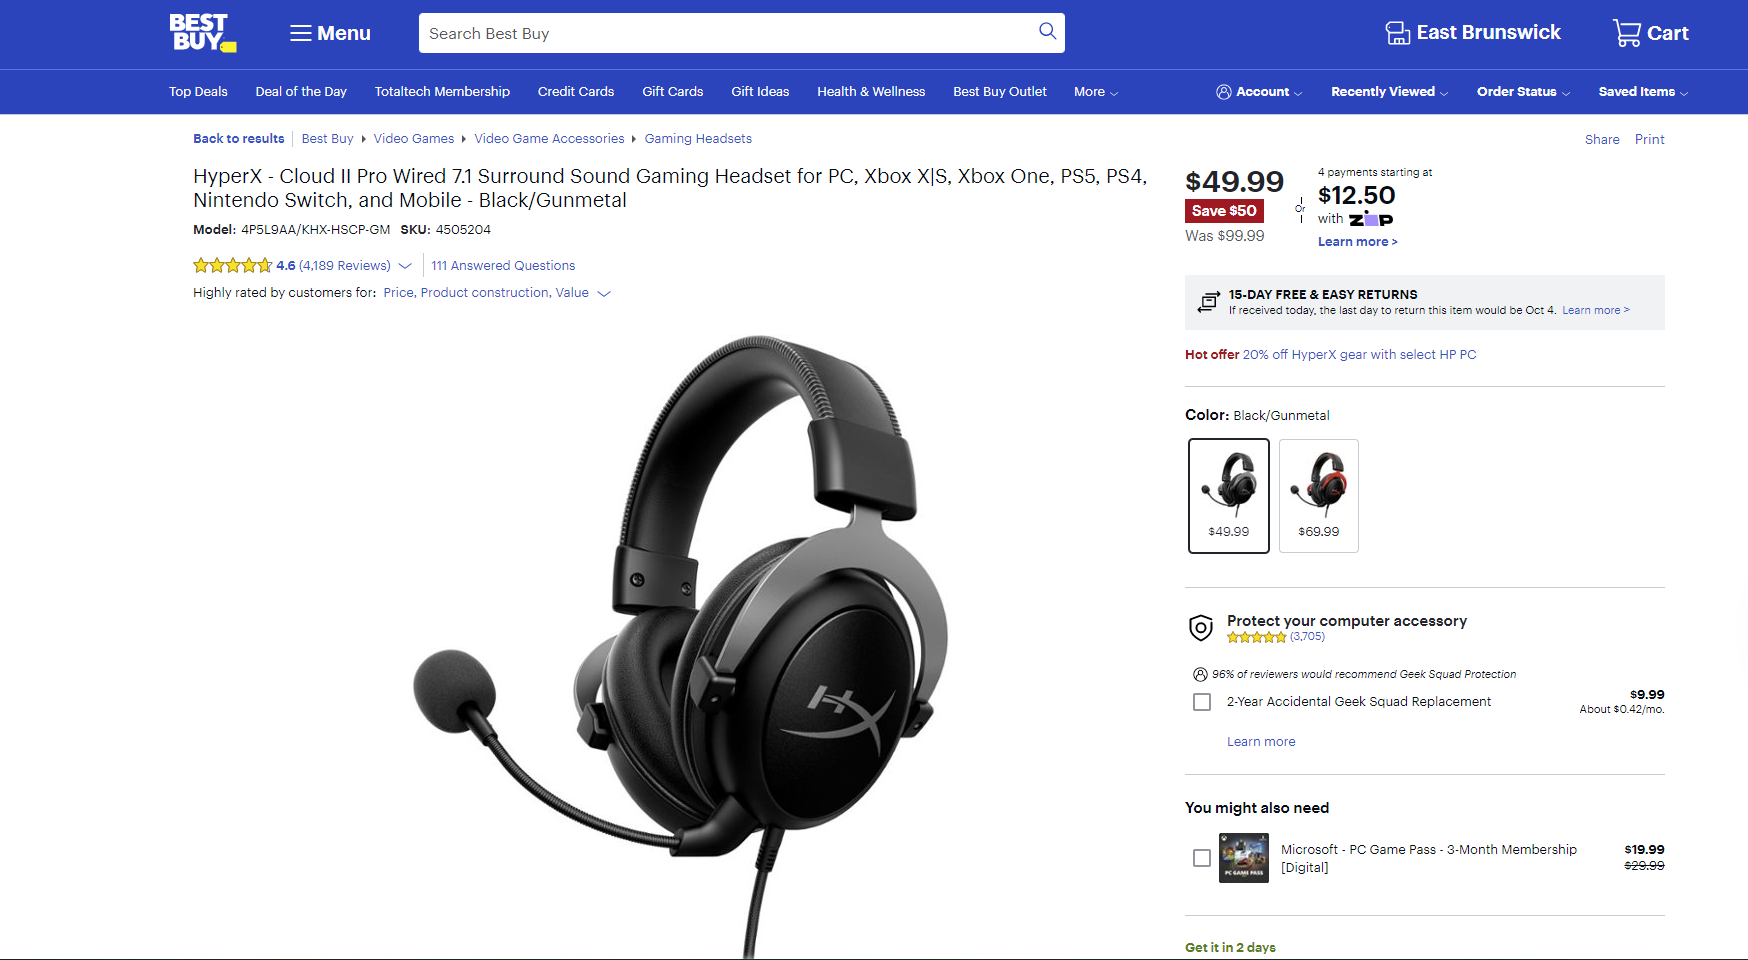 Price between bluetooth headset and headphones.